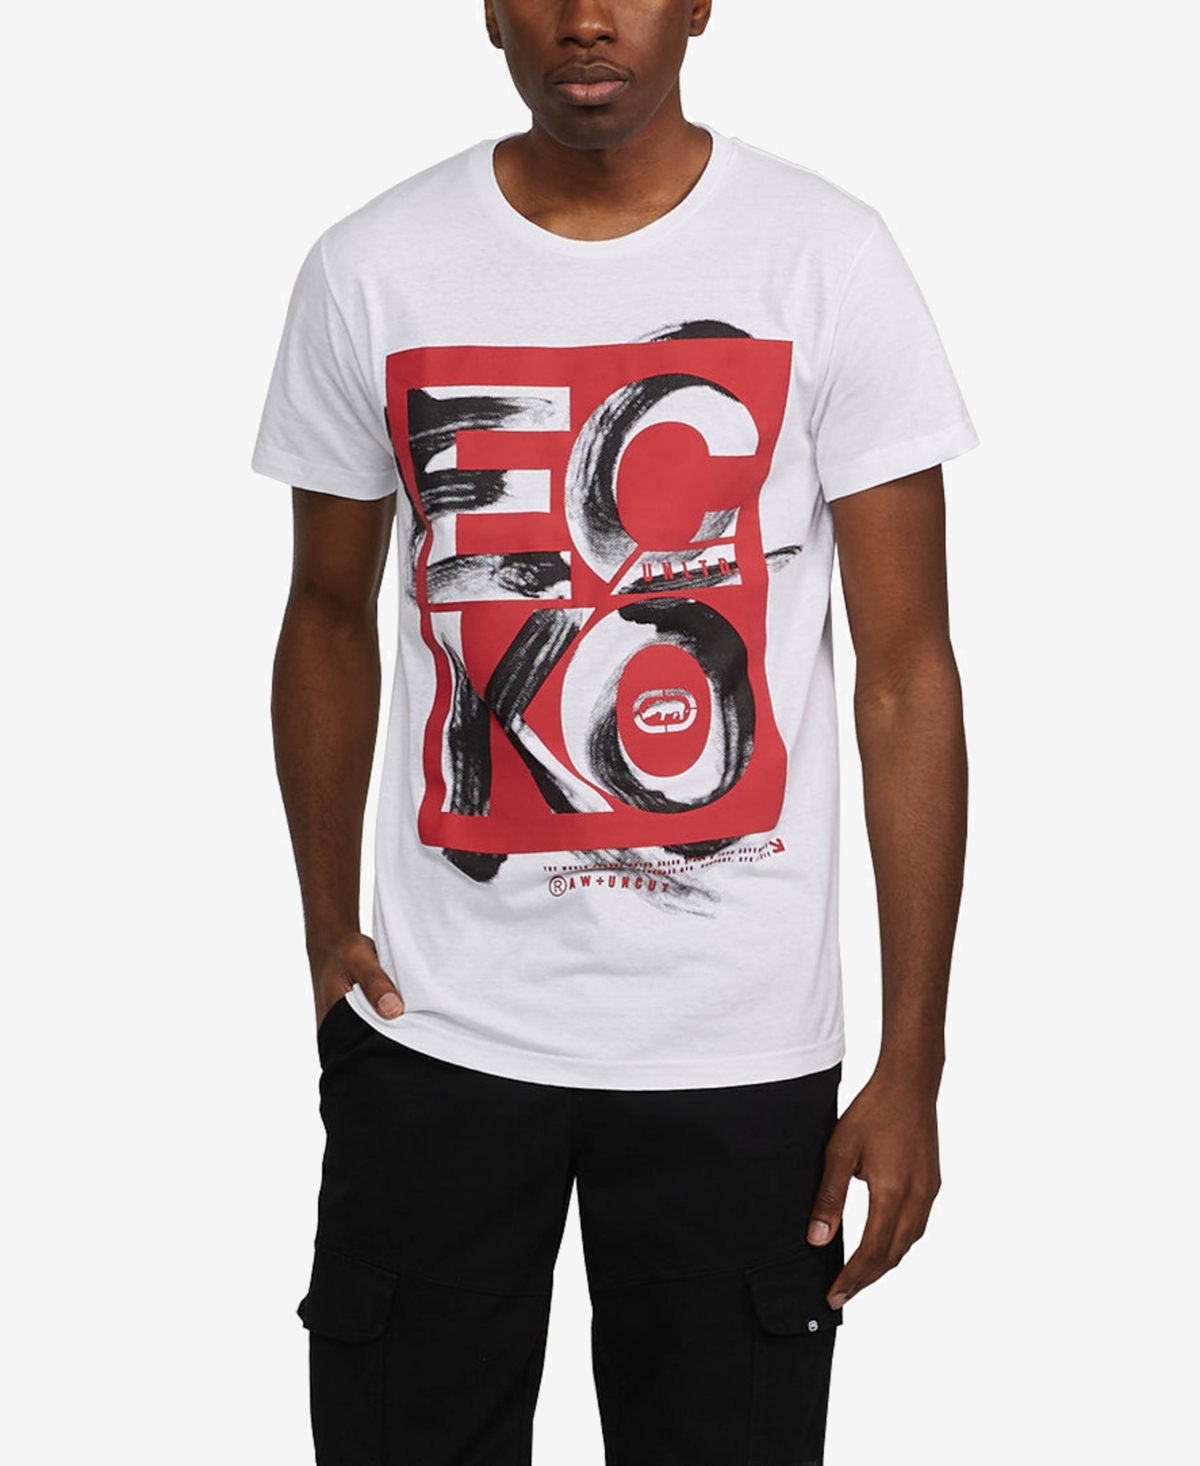 Ecko Unltd Men's Big and Tall Broadband Graphic T-shirt - Gray